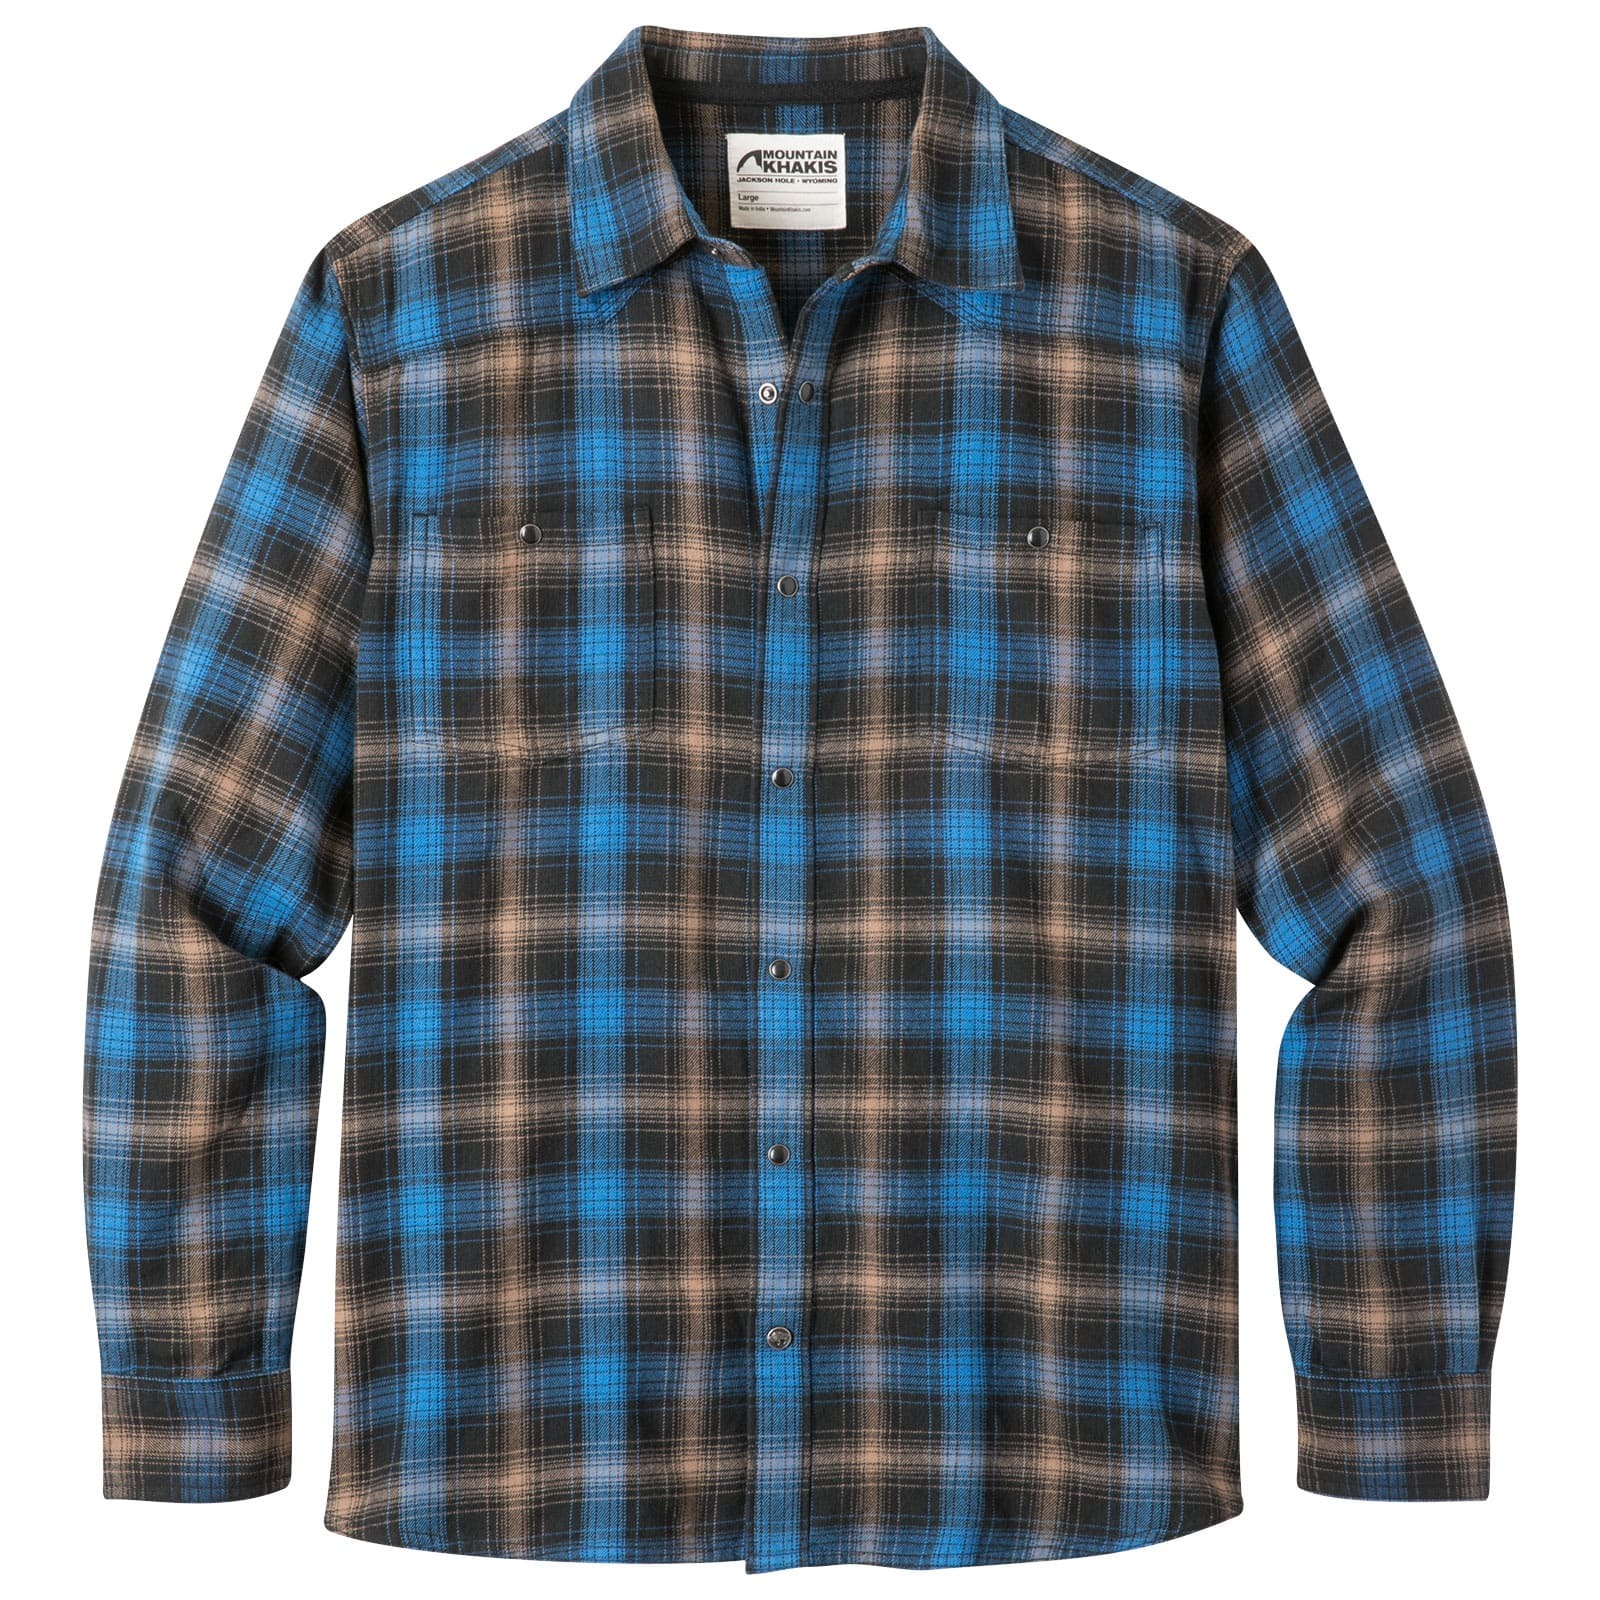 Saloon Flannel | Men's Plaid Flannel Shirt | Mountain Khakis